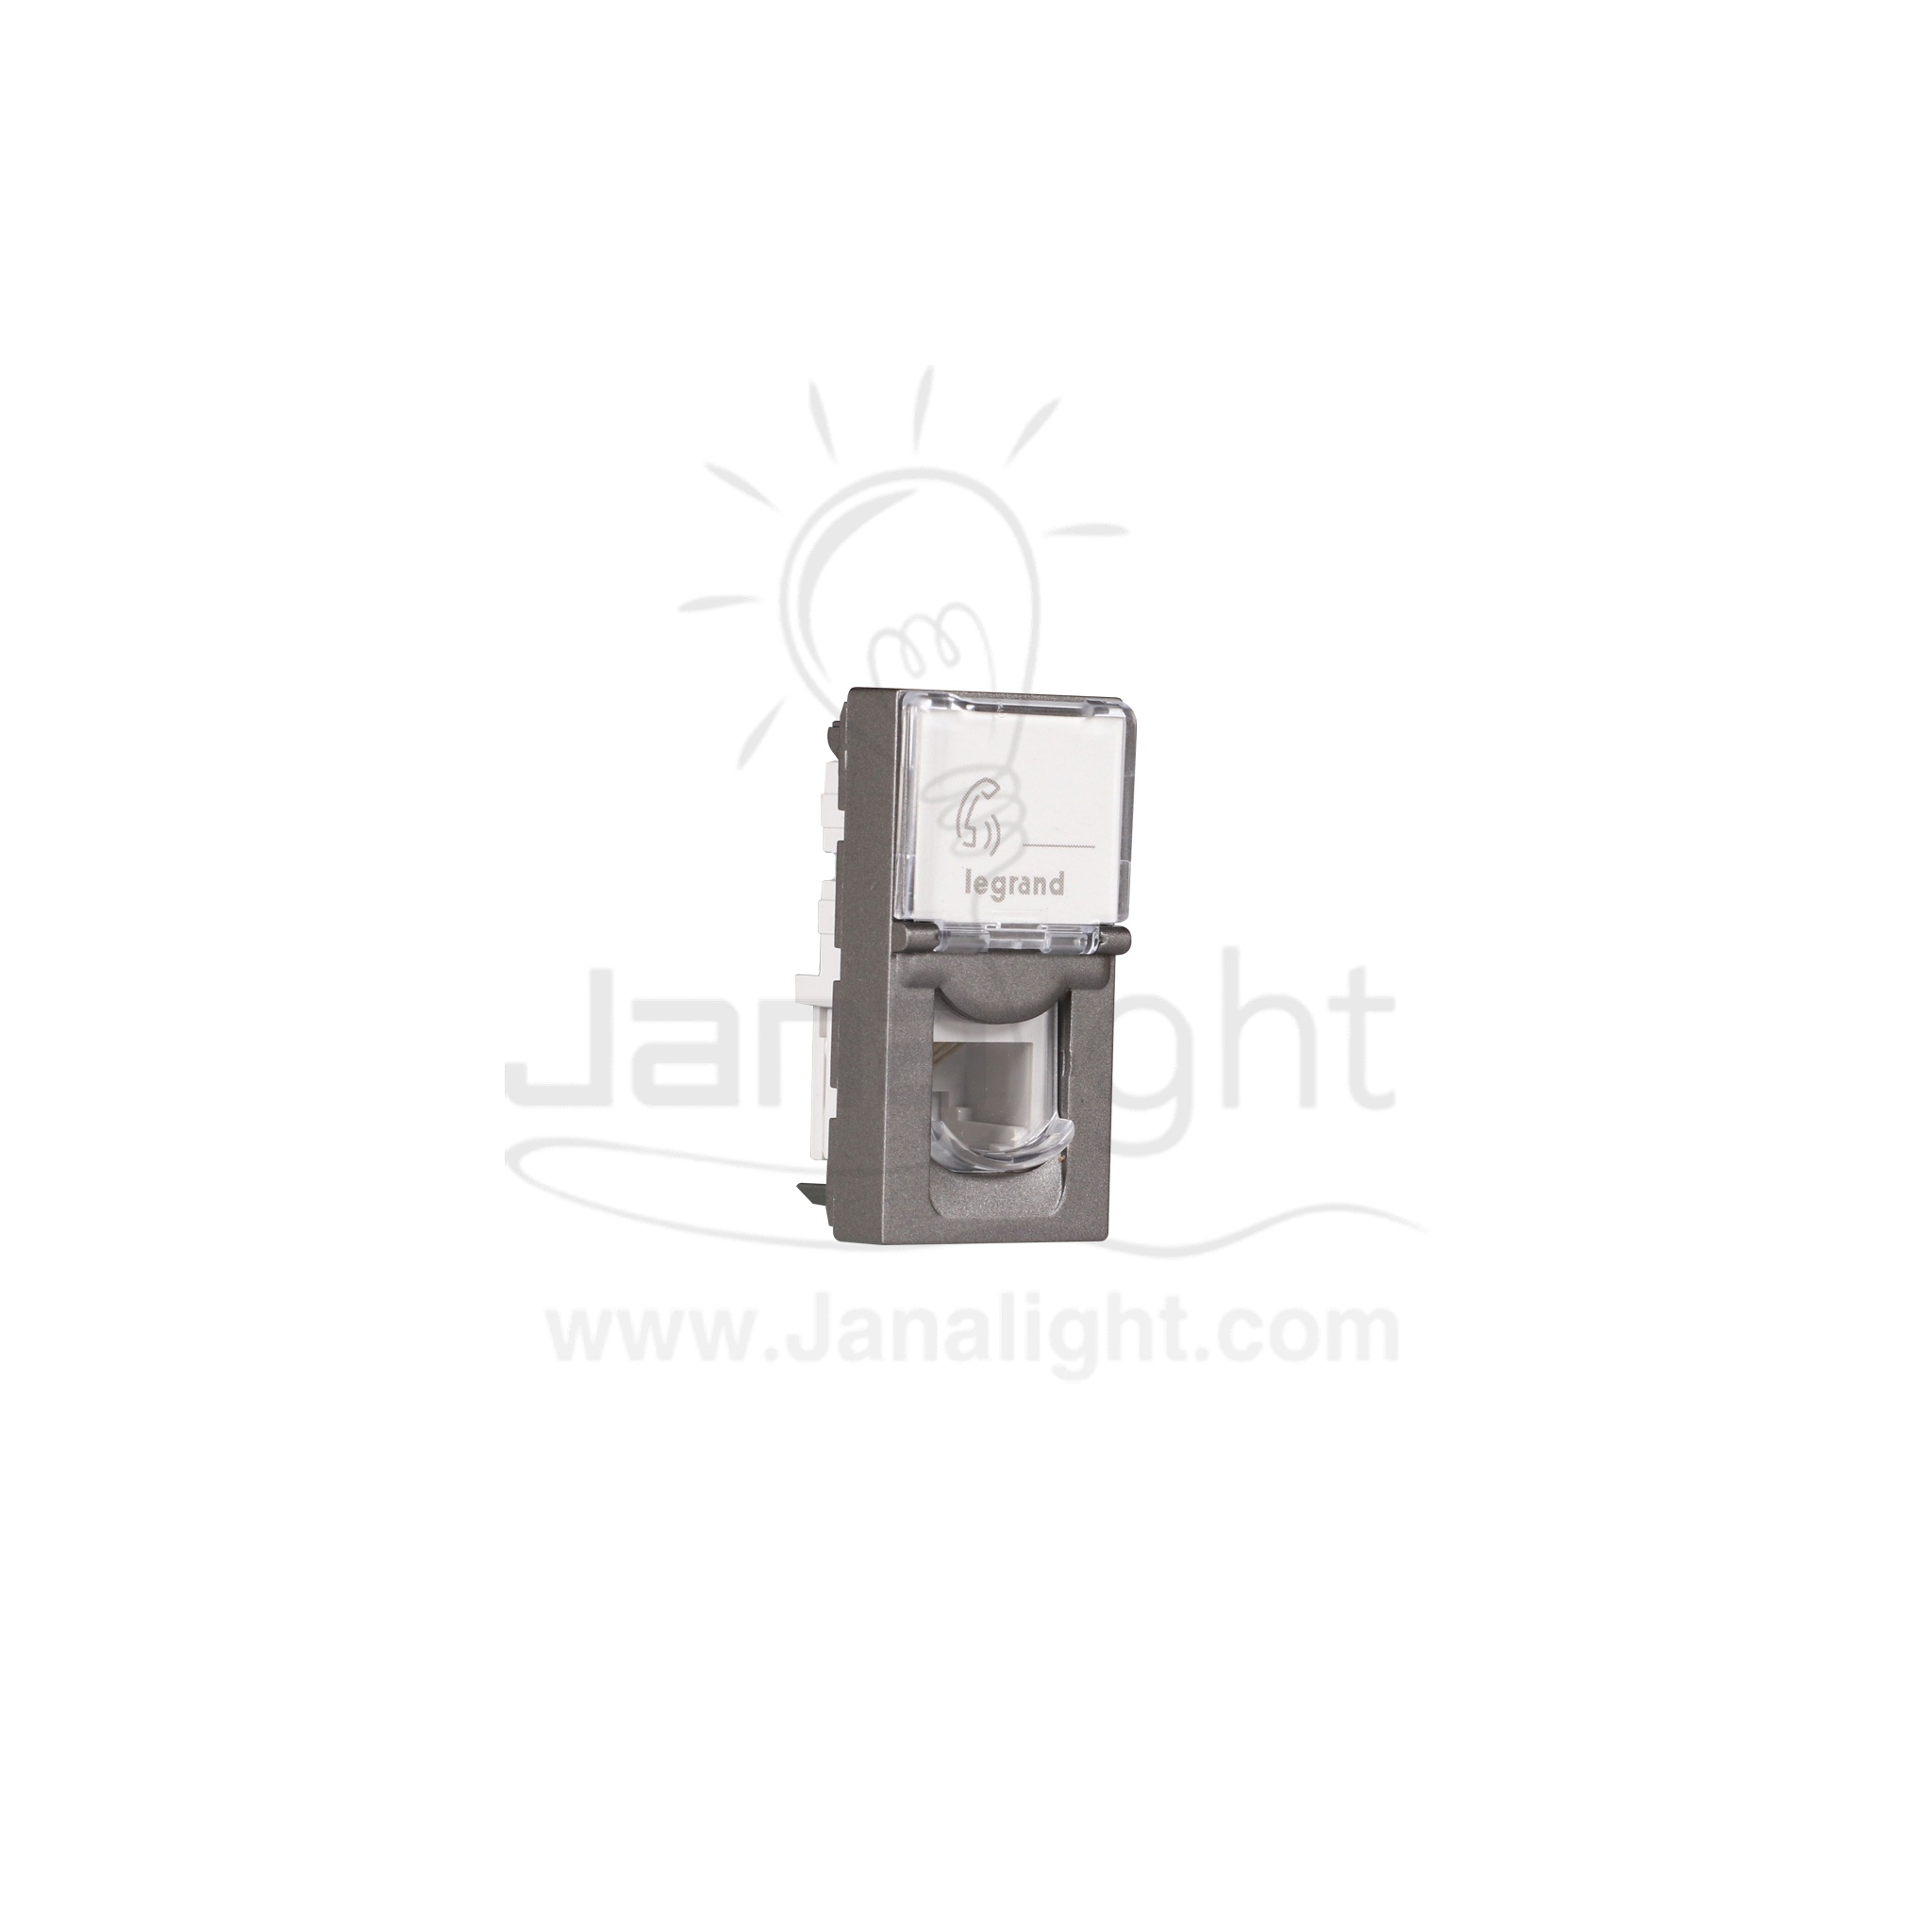 بريزة تليفون ليجراند مغنيزيوم Legrand Phone Socket - Split-Bolt Connectors magnesium 15502009(1)